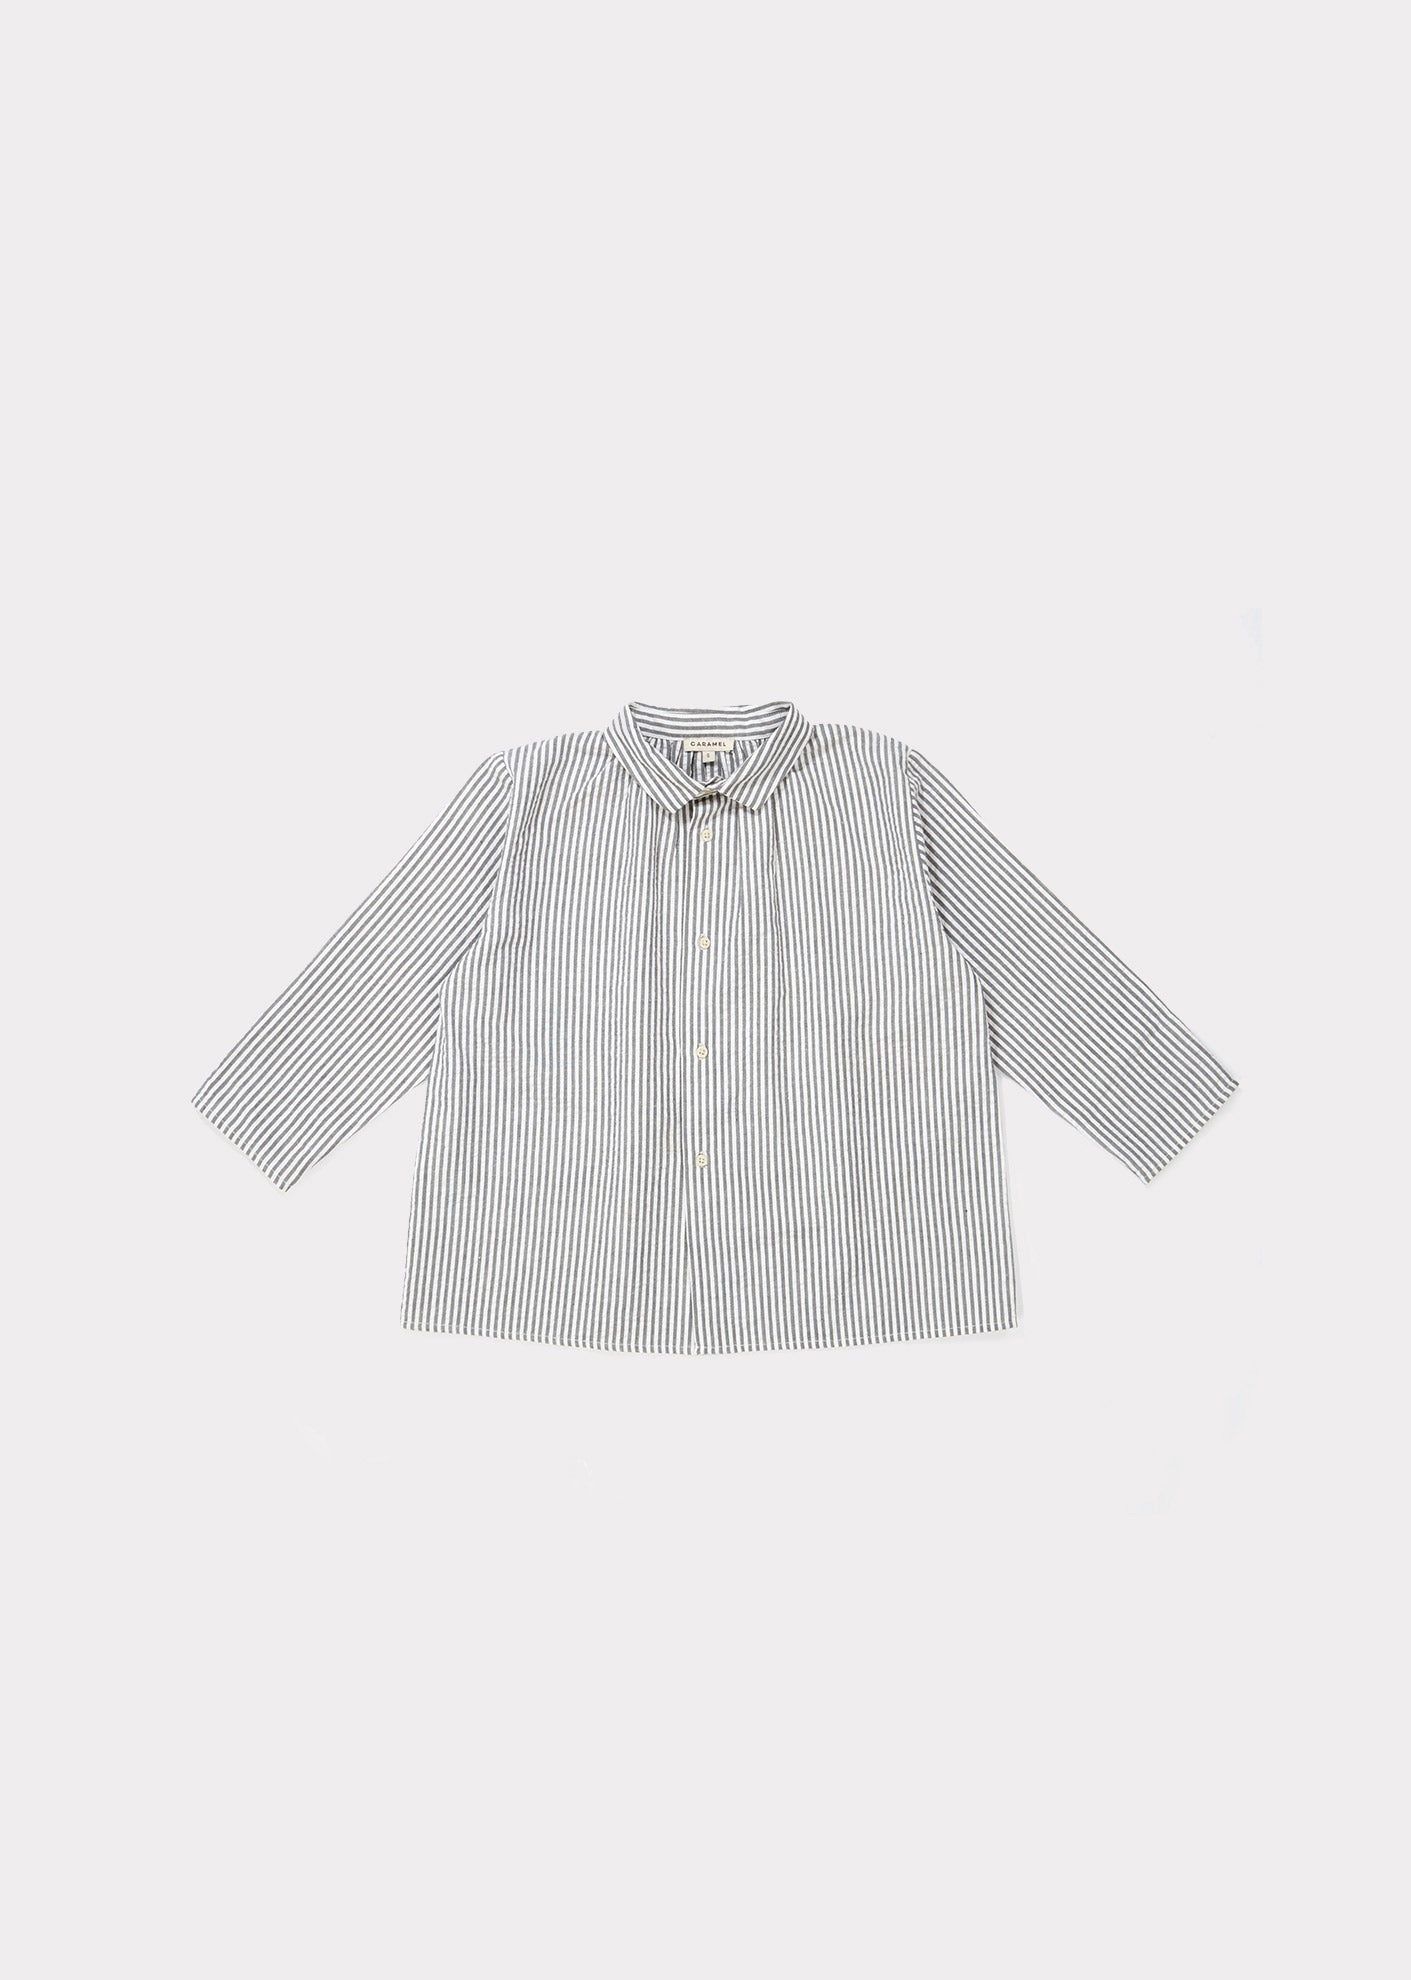 Boys Light Grey Striped Cotton Shirt